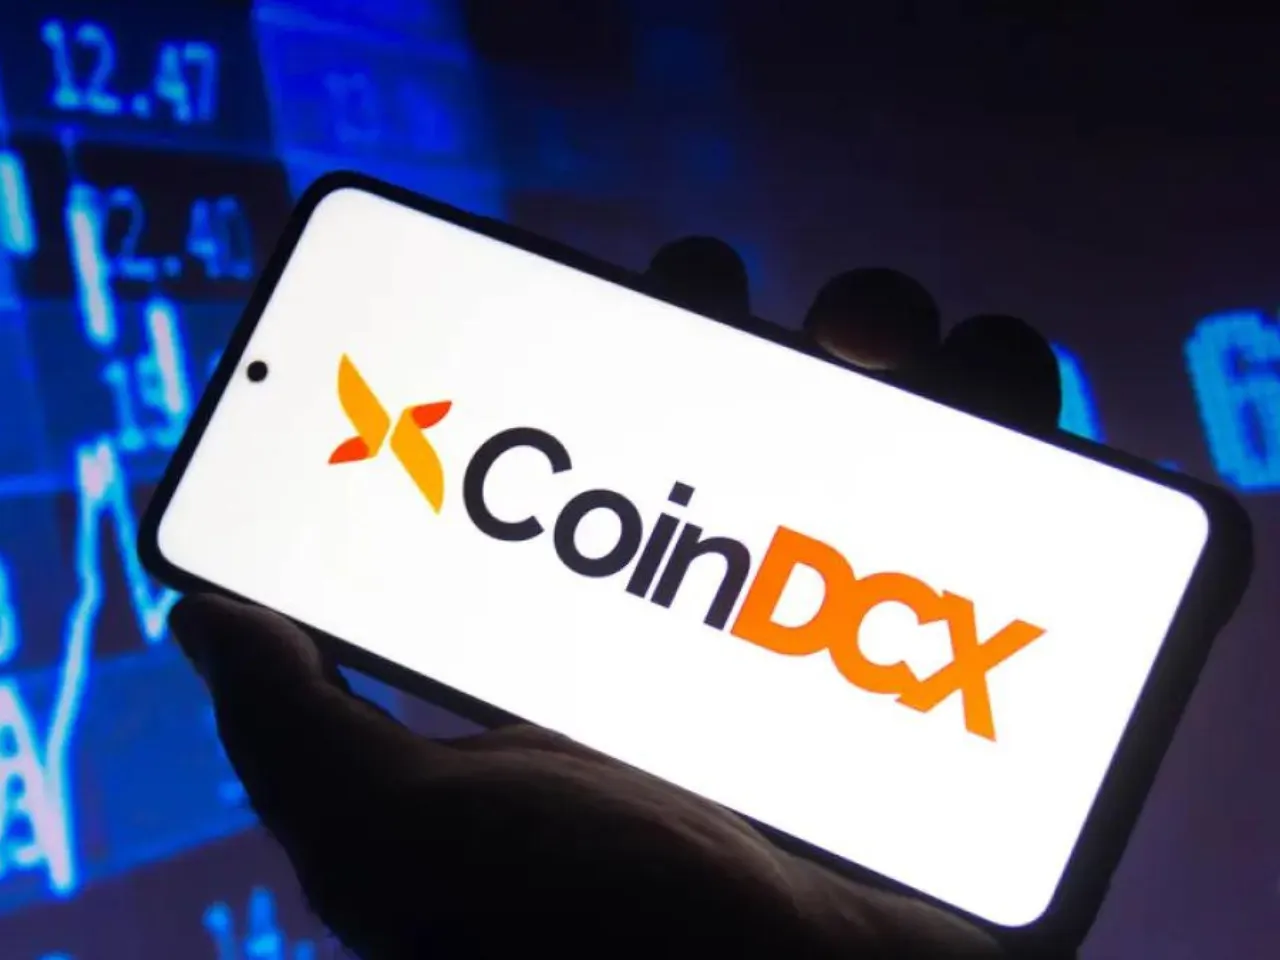 coindcx logo